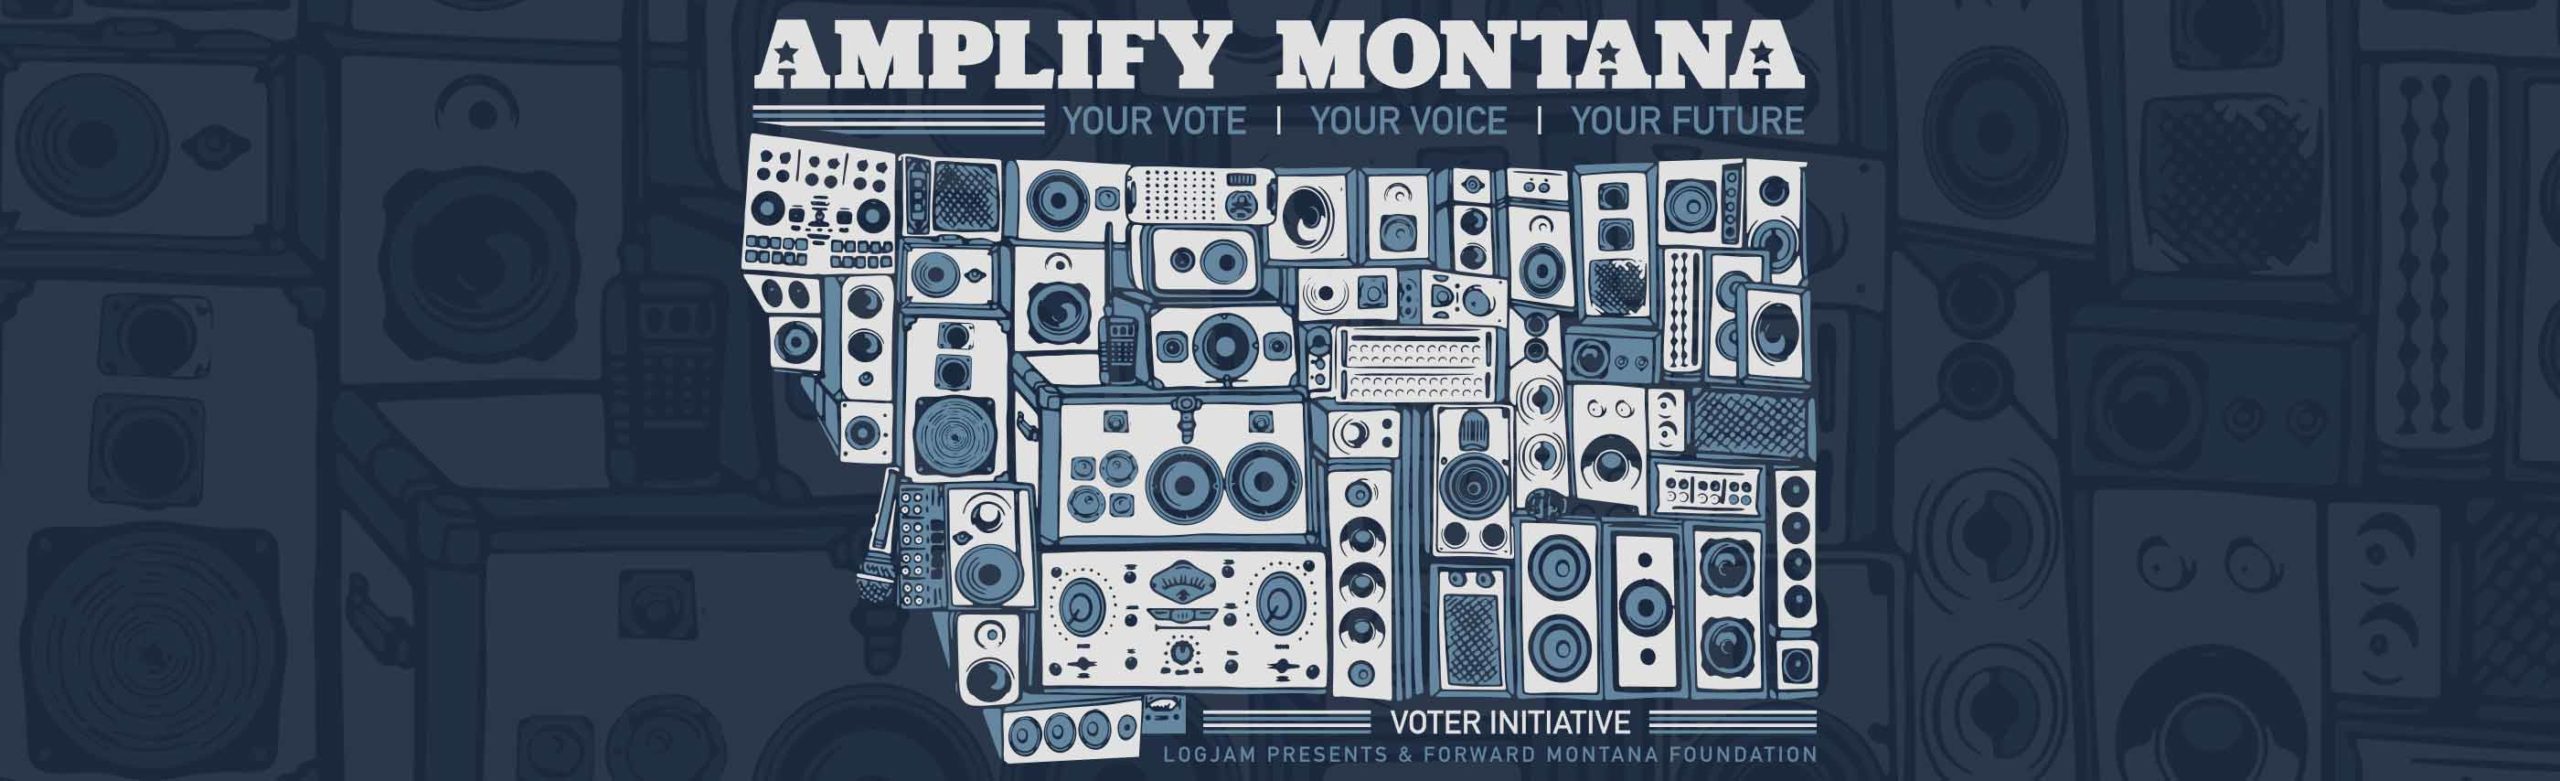 Logjam Presents & Forward Montana Foundation Partner On New Voter Registration Initiative “Amplify Montana” Image